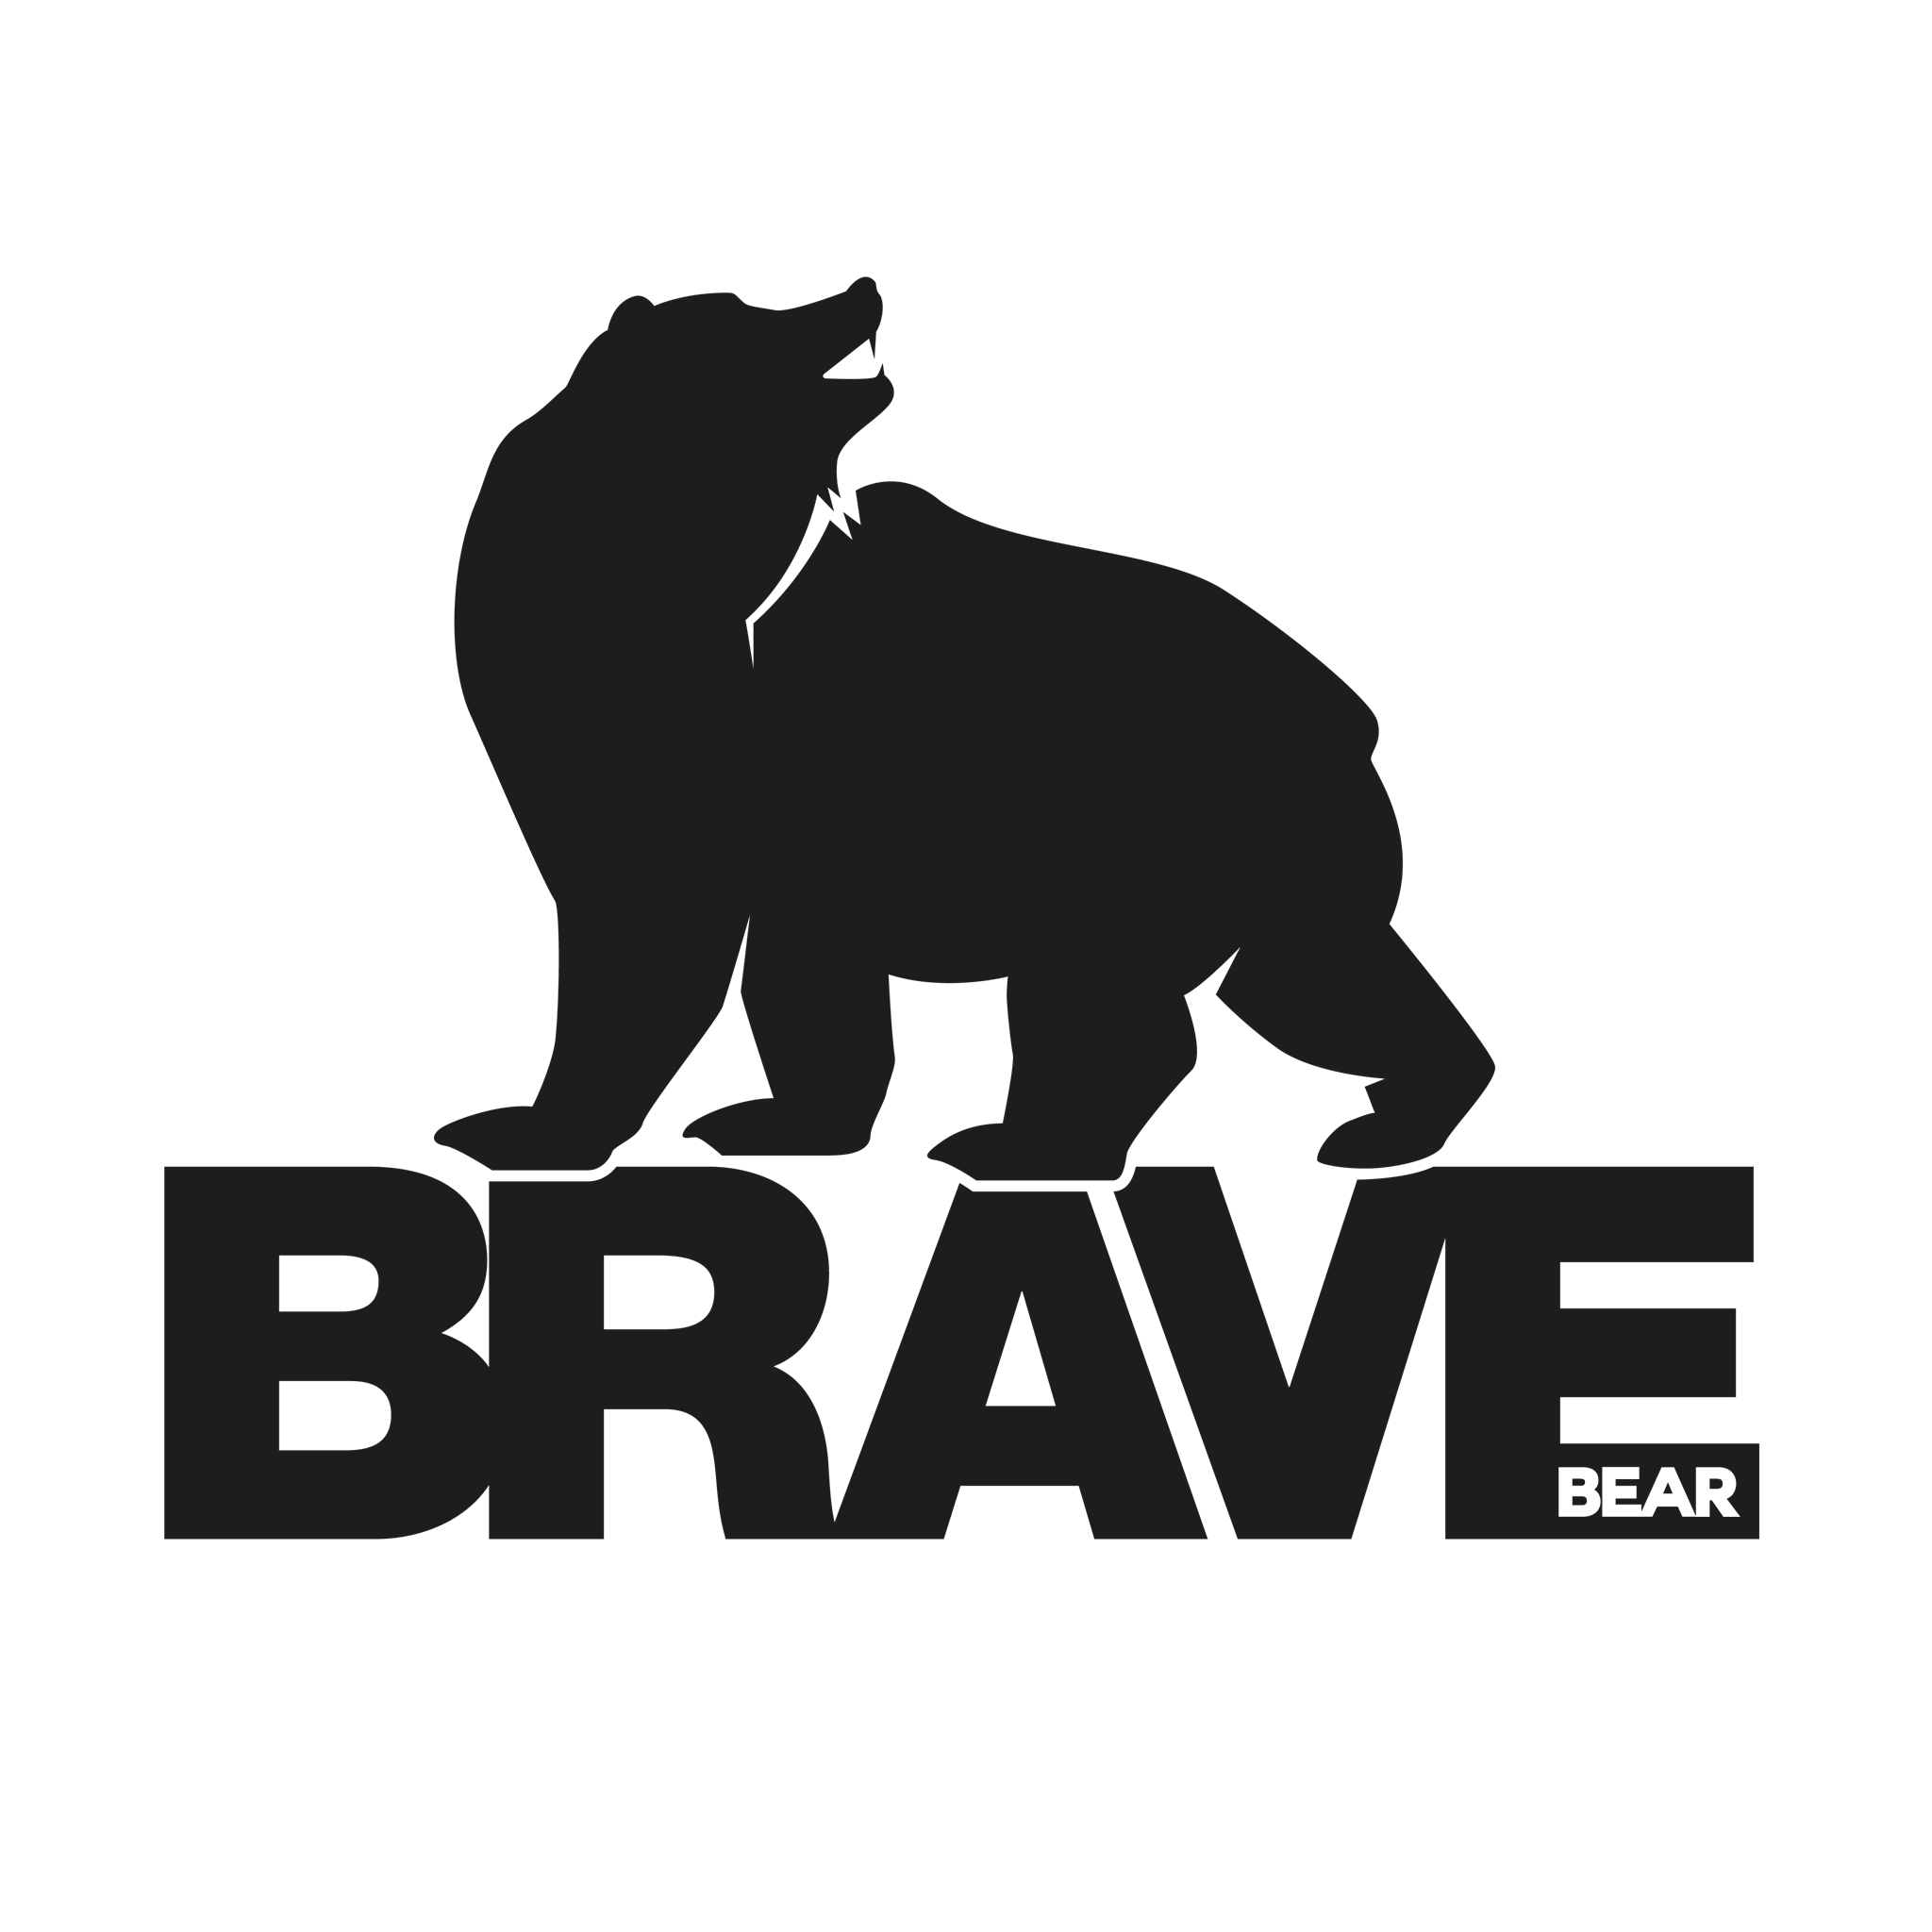 Brave Bear Marketing Ltd profile on Qualified.One